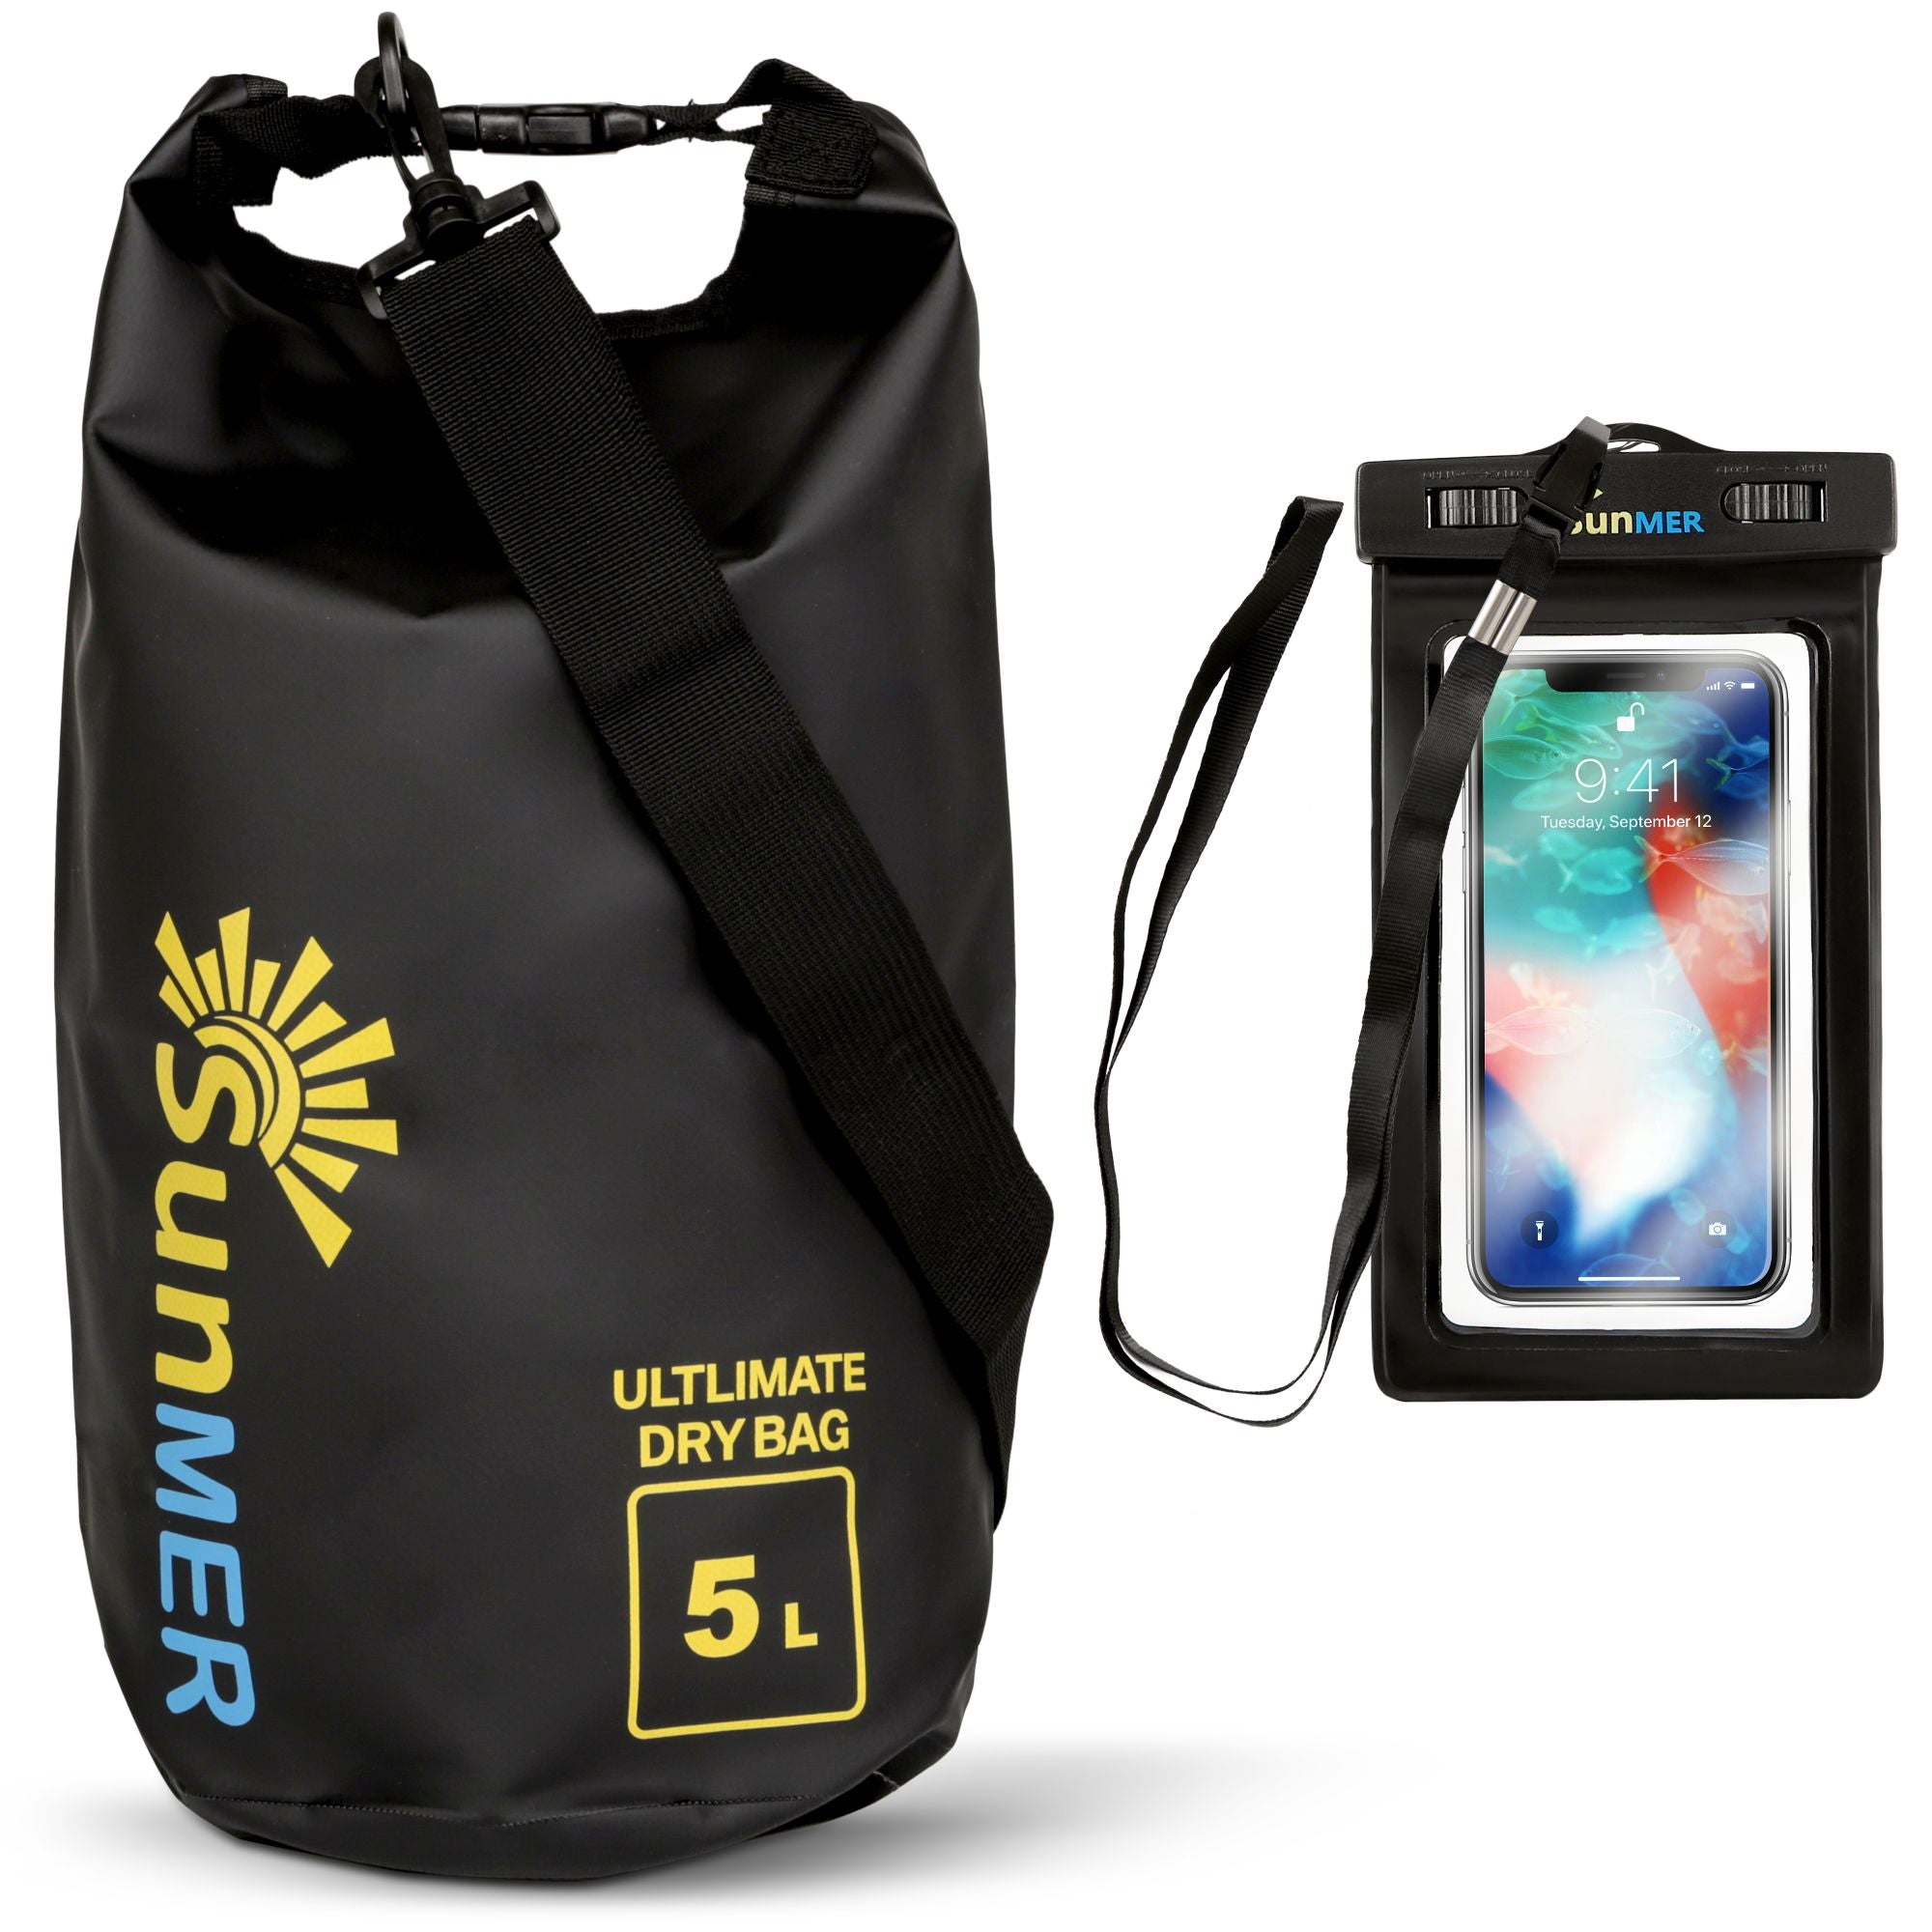 SUNMER 5L Dry Bag With Waterproof Phone Case - Black